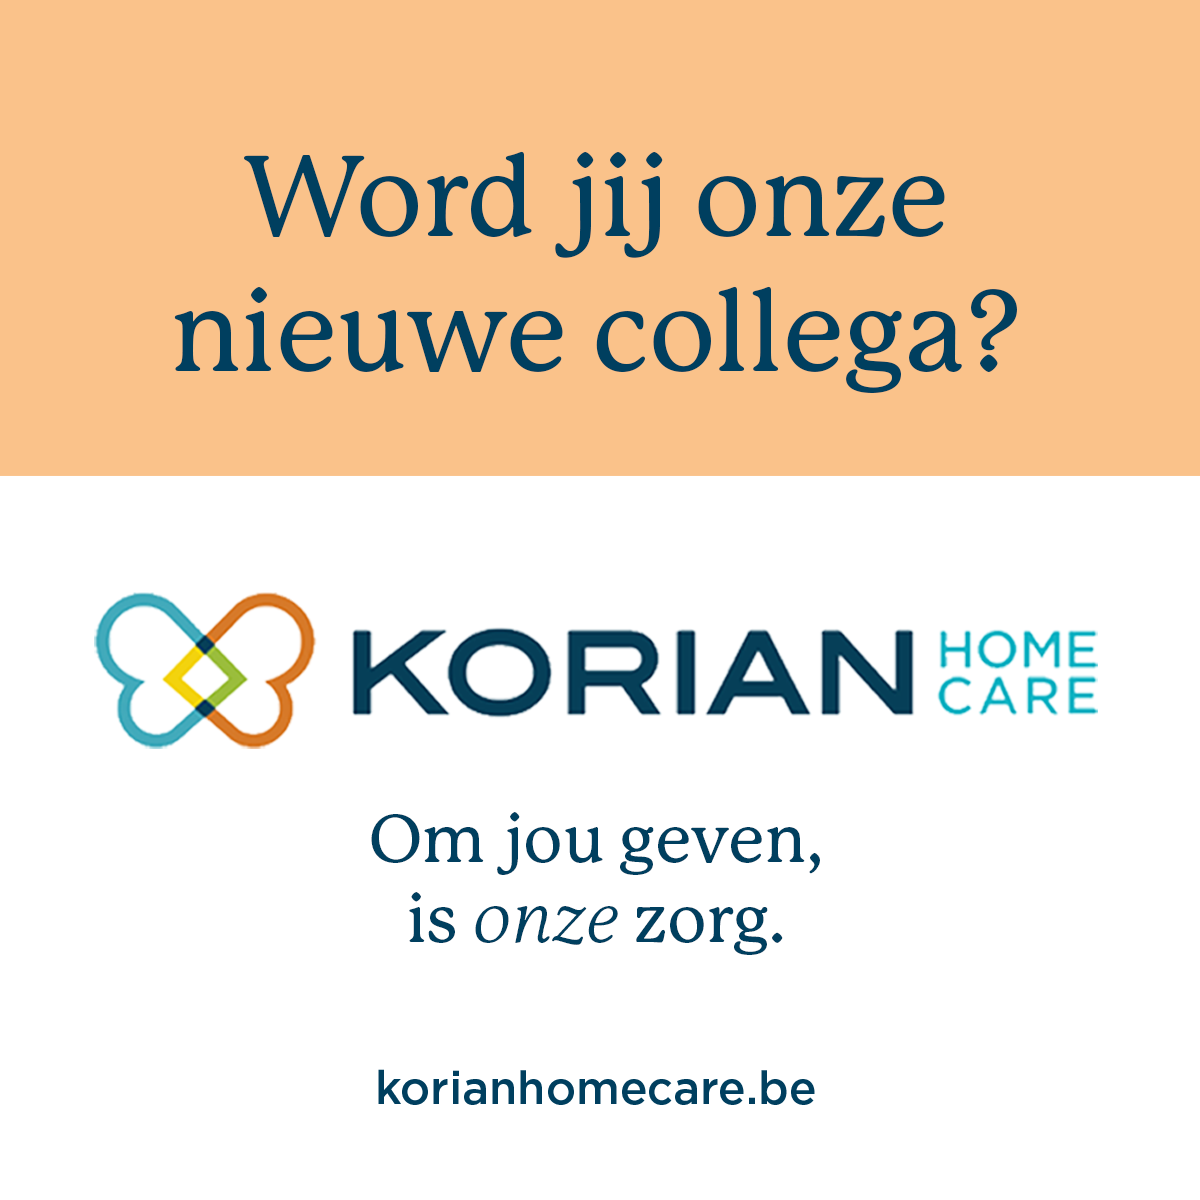 Korian Home Care slogan